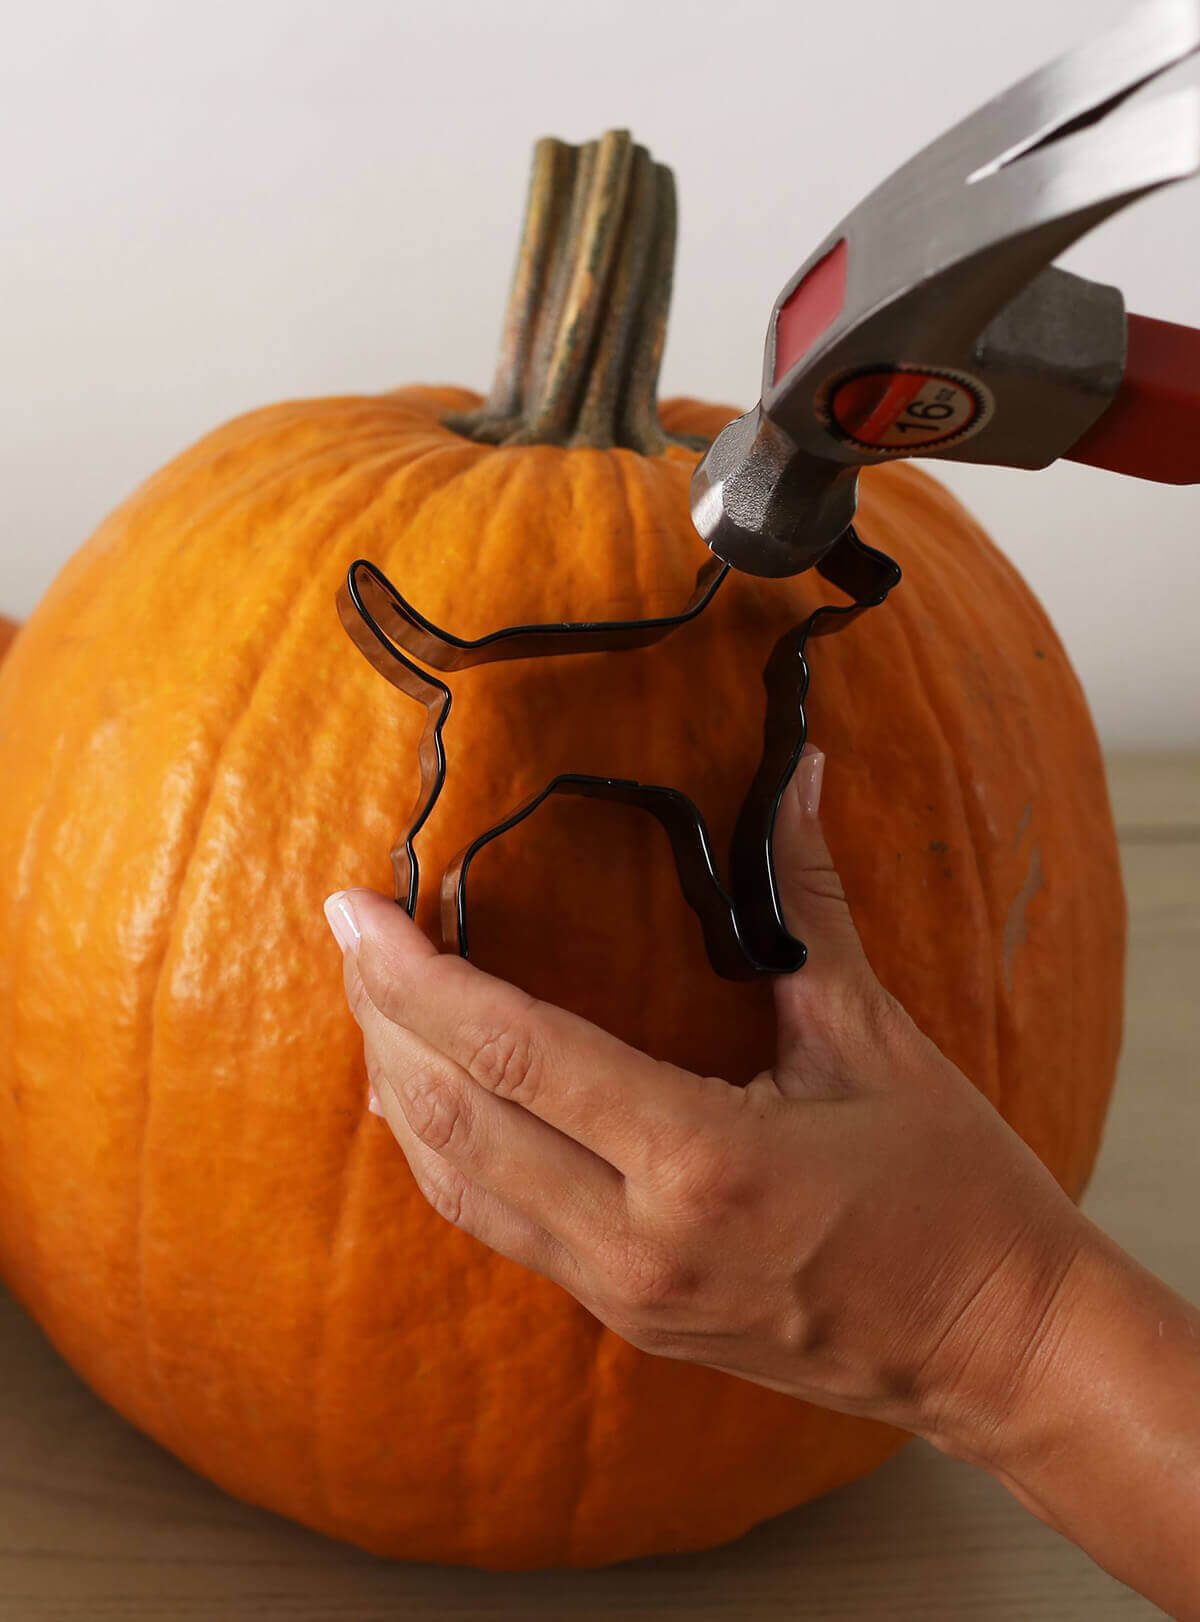 DIY Pumpkin Carving Ideas: The Cookie Cutter Trick